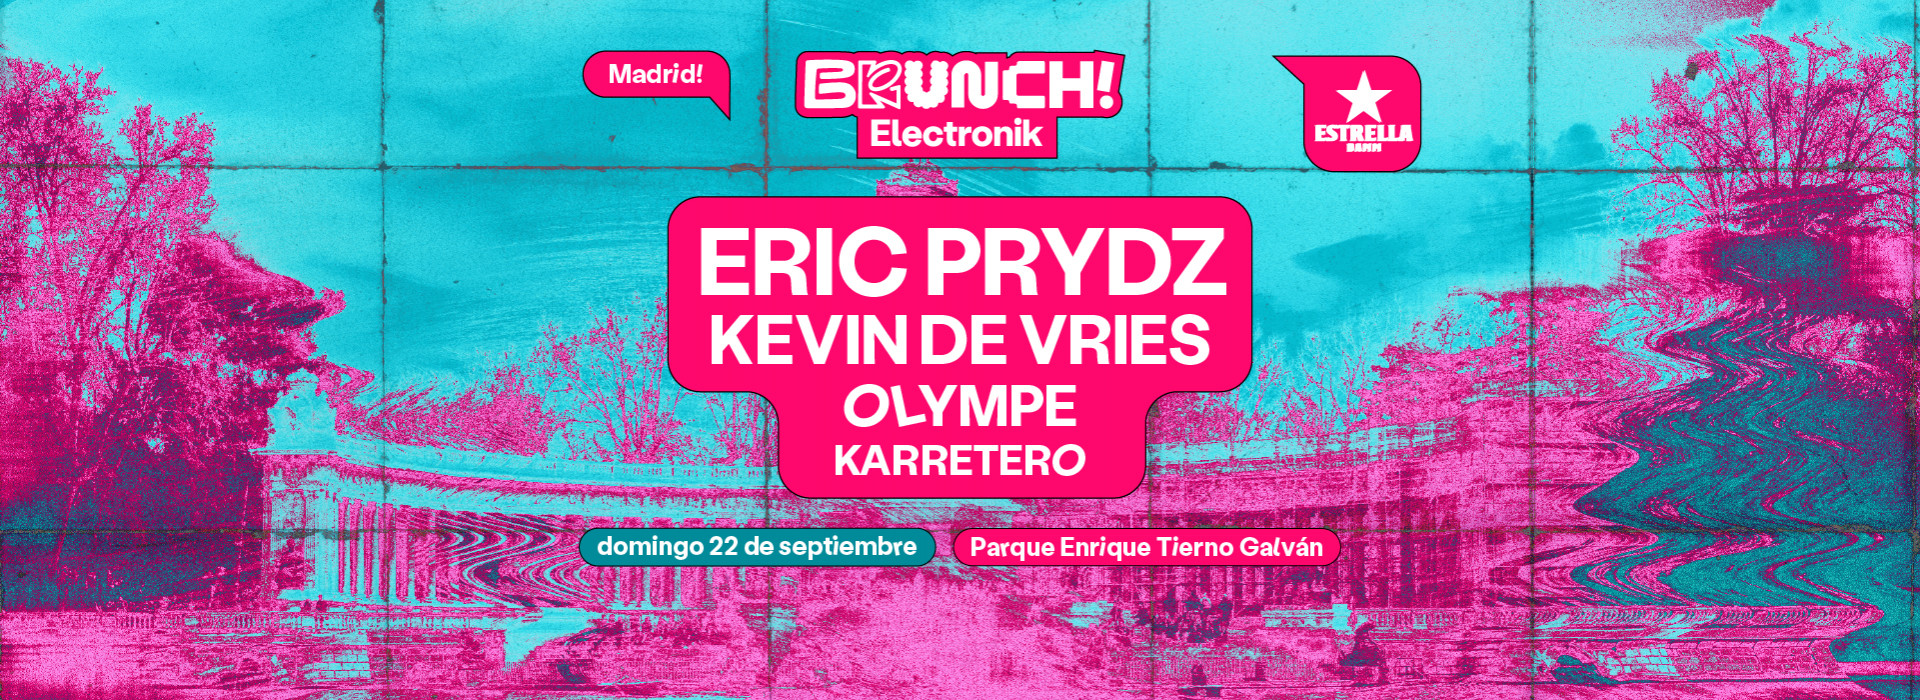 Brunch Electronik Madrid #10: Eric Prydz, Kevin de Vries, Olympe, Karretero